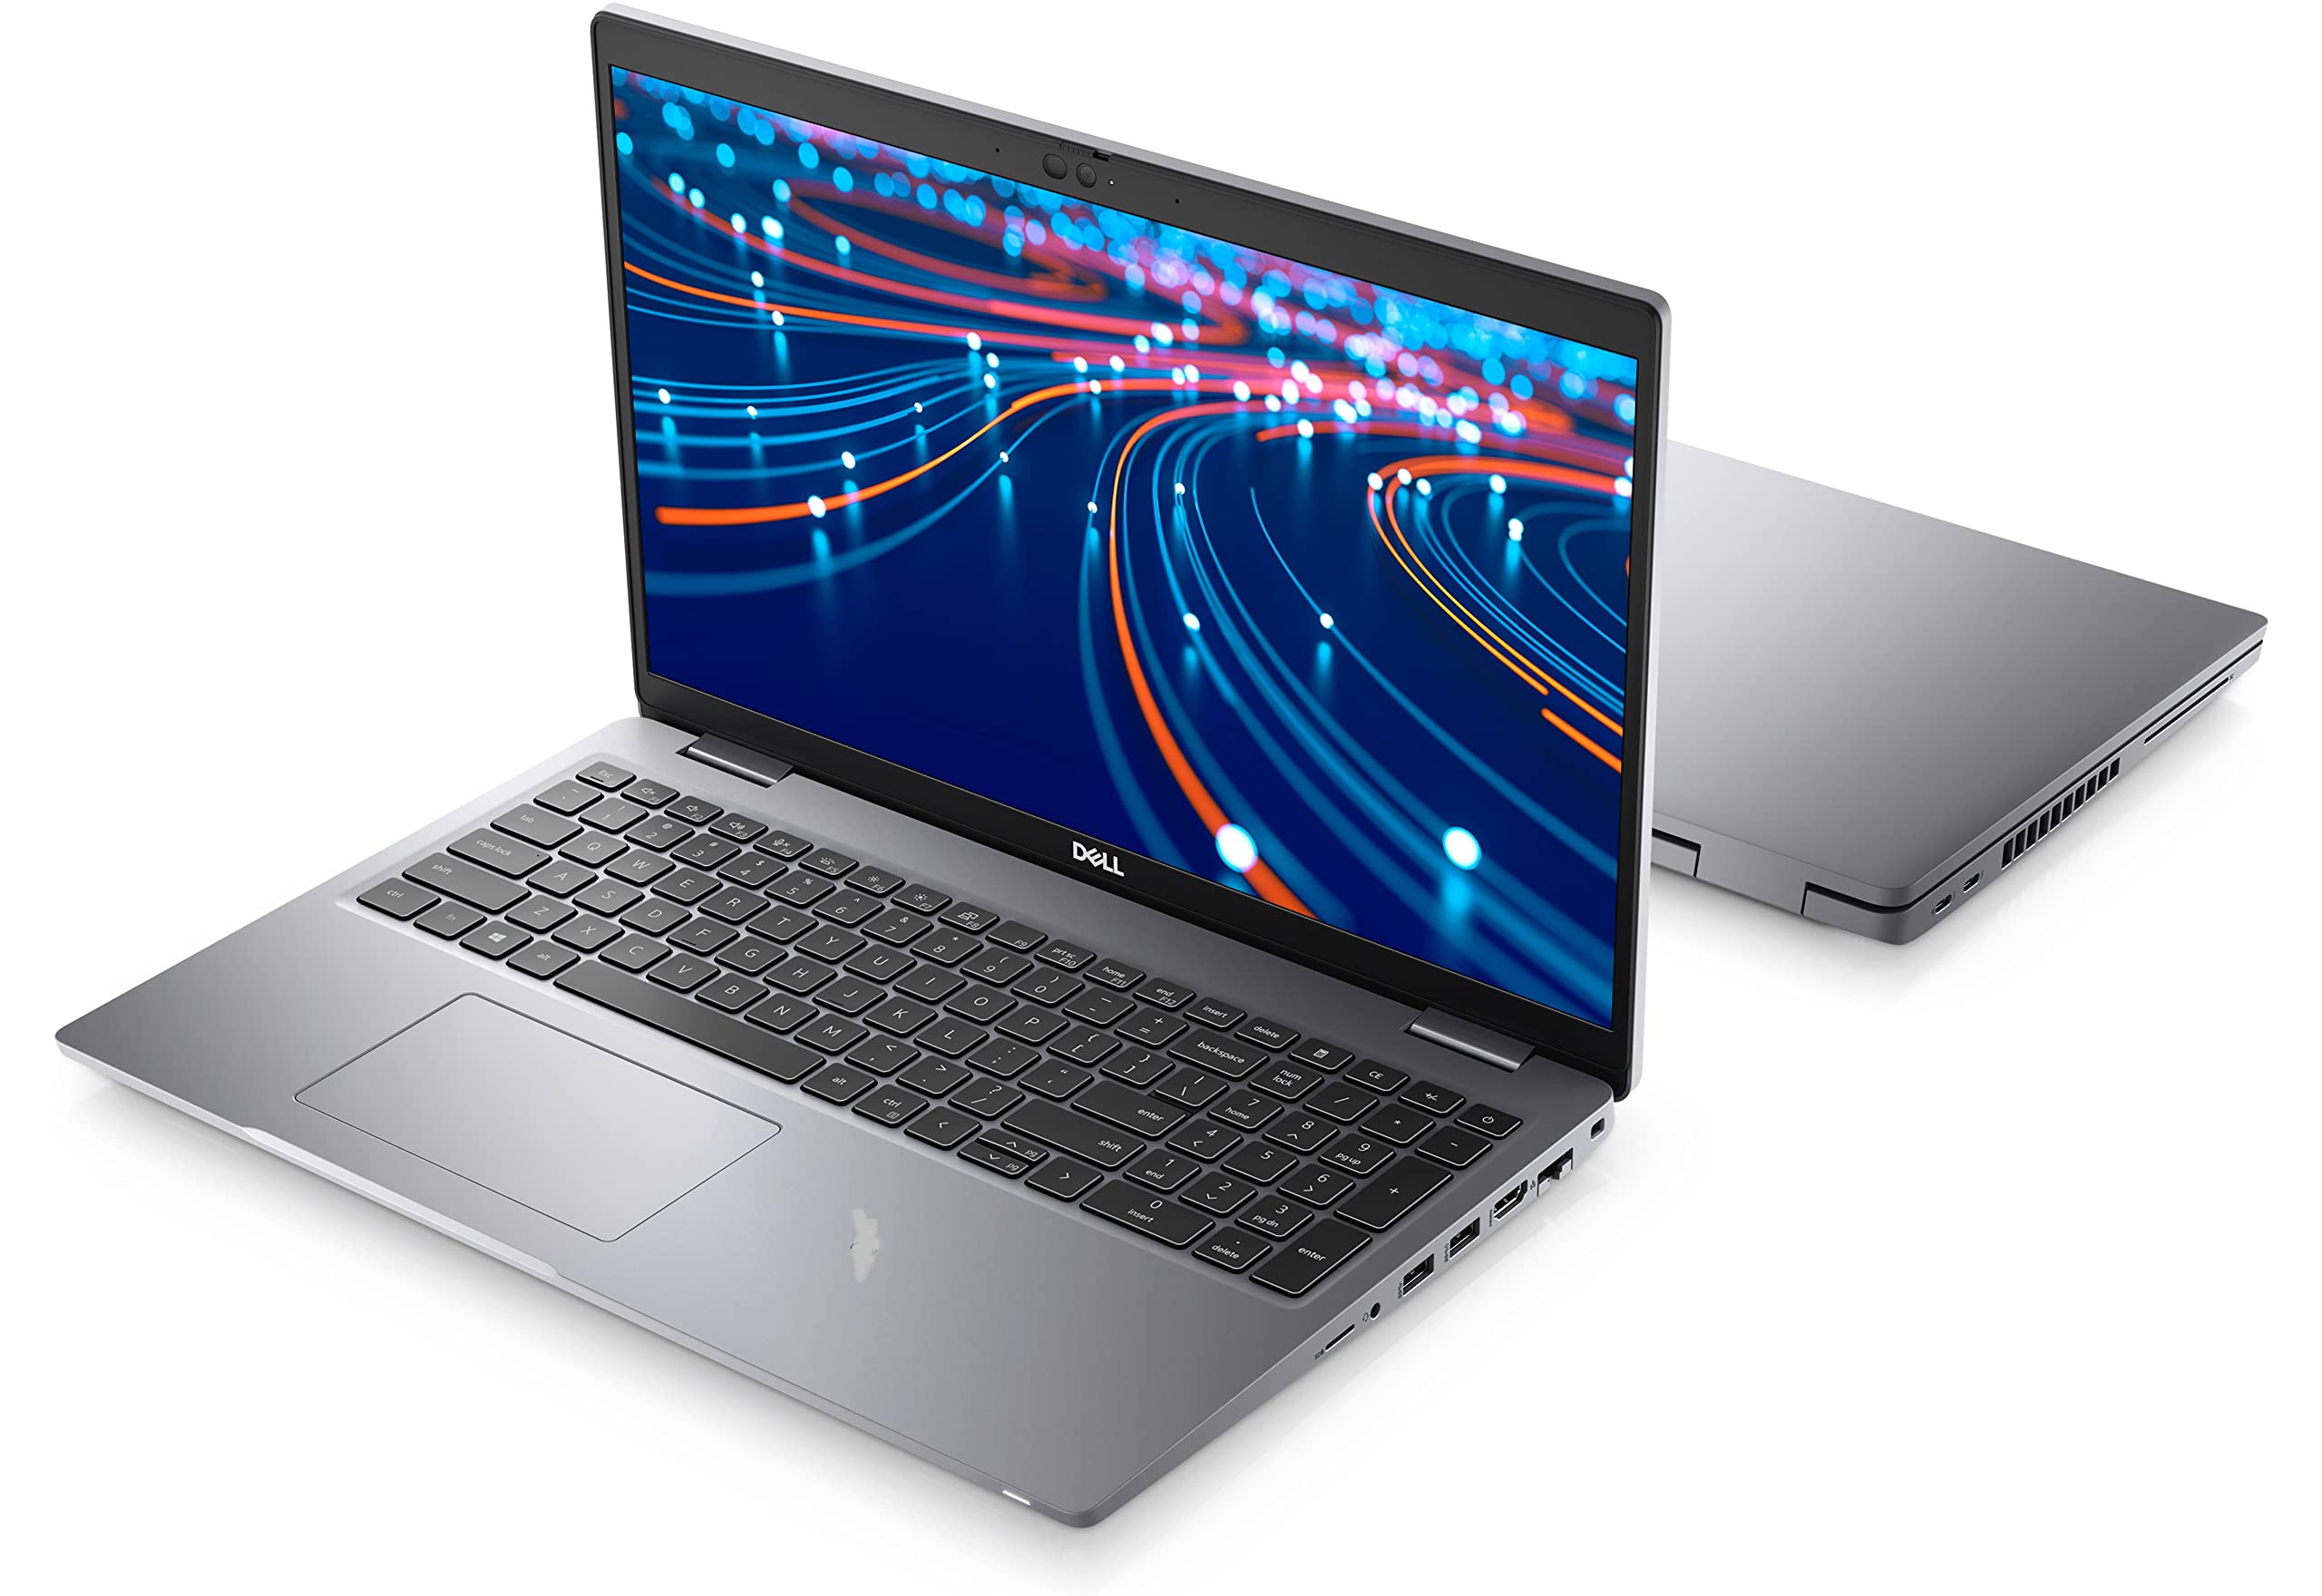 Dell Latitude 5420 Laptop PC FHD 1920 x 1080 Touchscreen, Intel Core i5-1145G7 Processor, 16GB Ram, 512GB NVMe SSD, HDMI, Thunderbolt, Windows 10 Pro (Renewed)